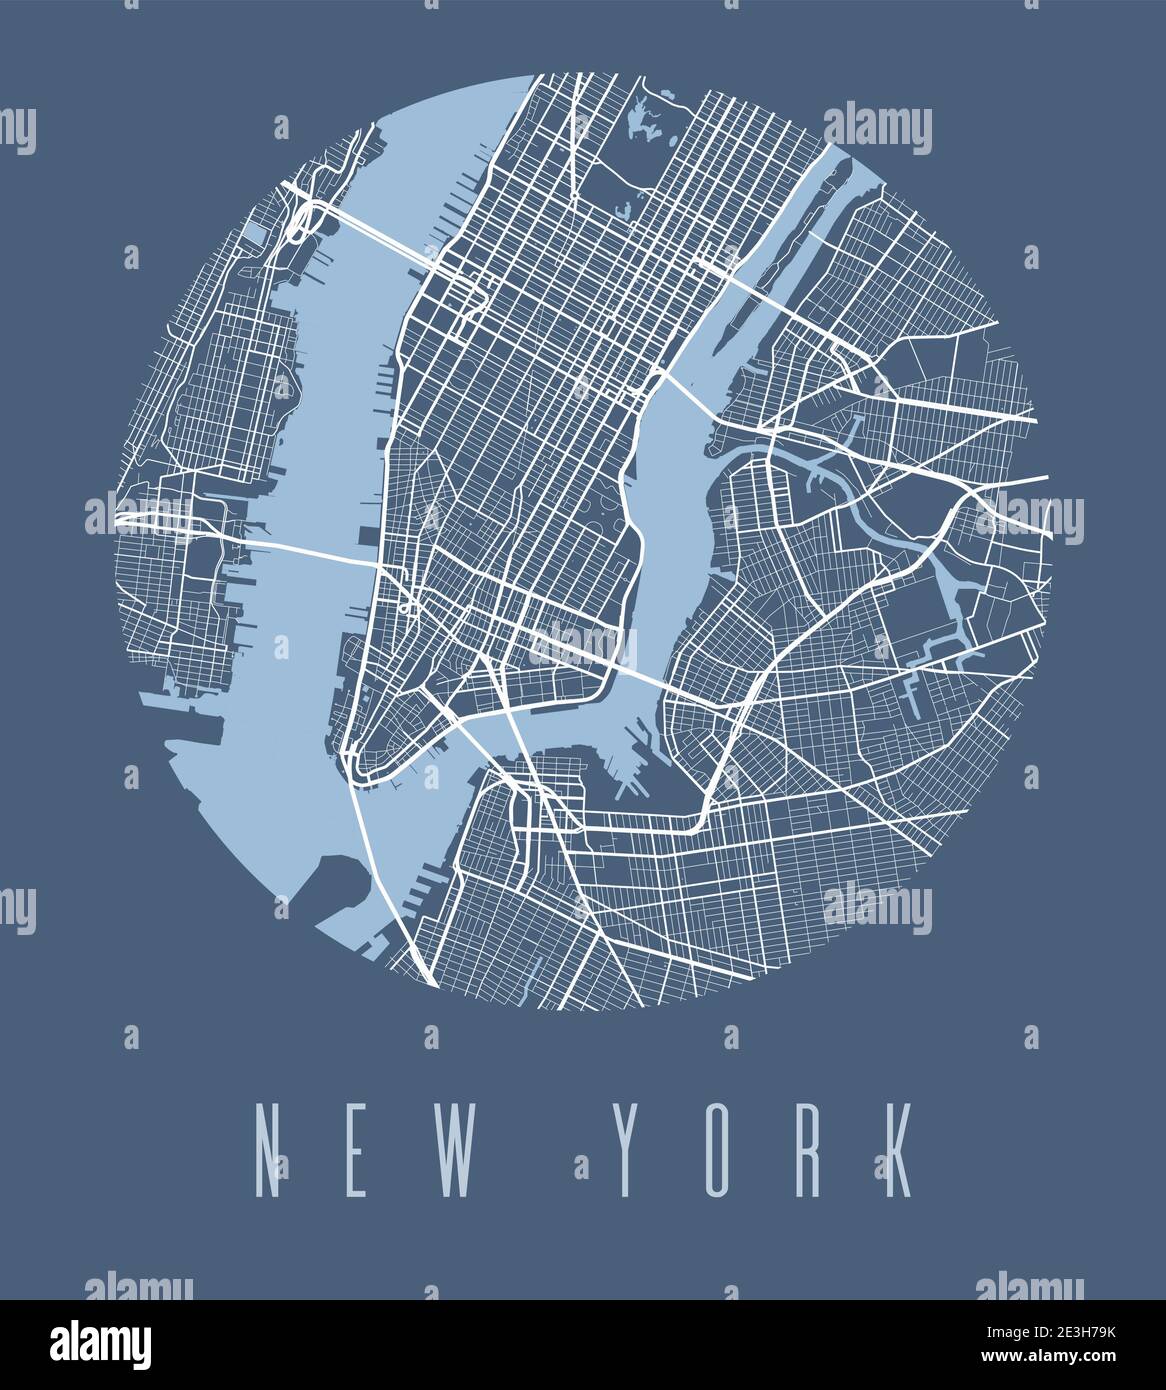 New York map poster. Decorative design street map of New York city ...